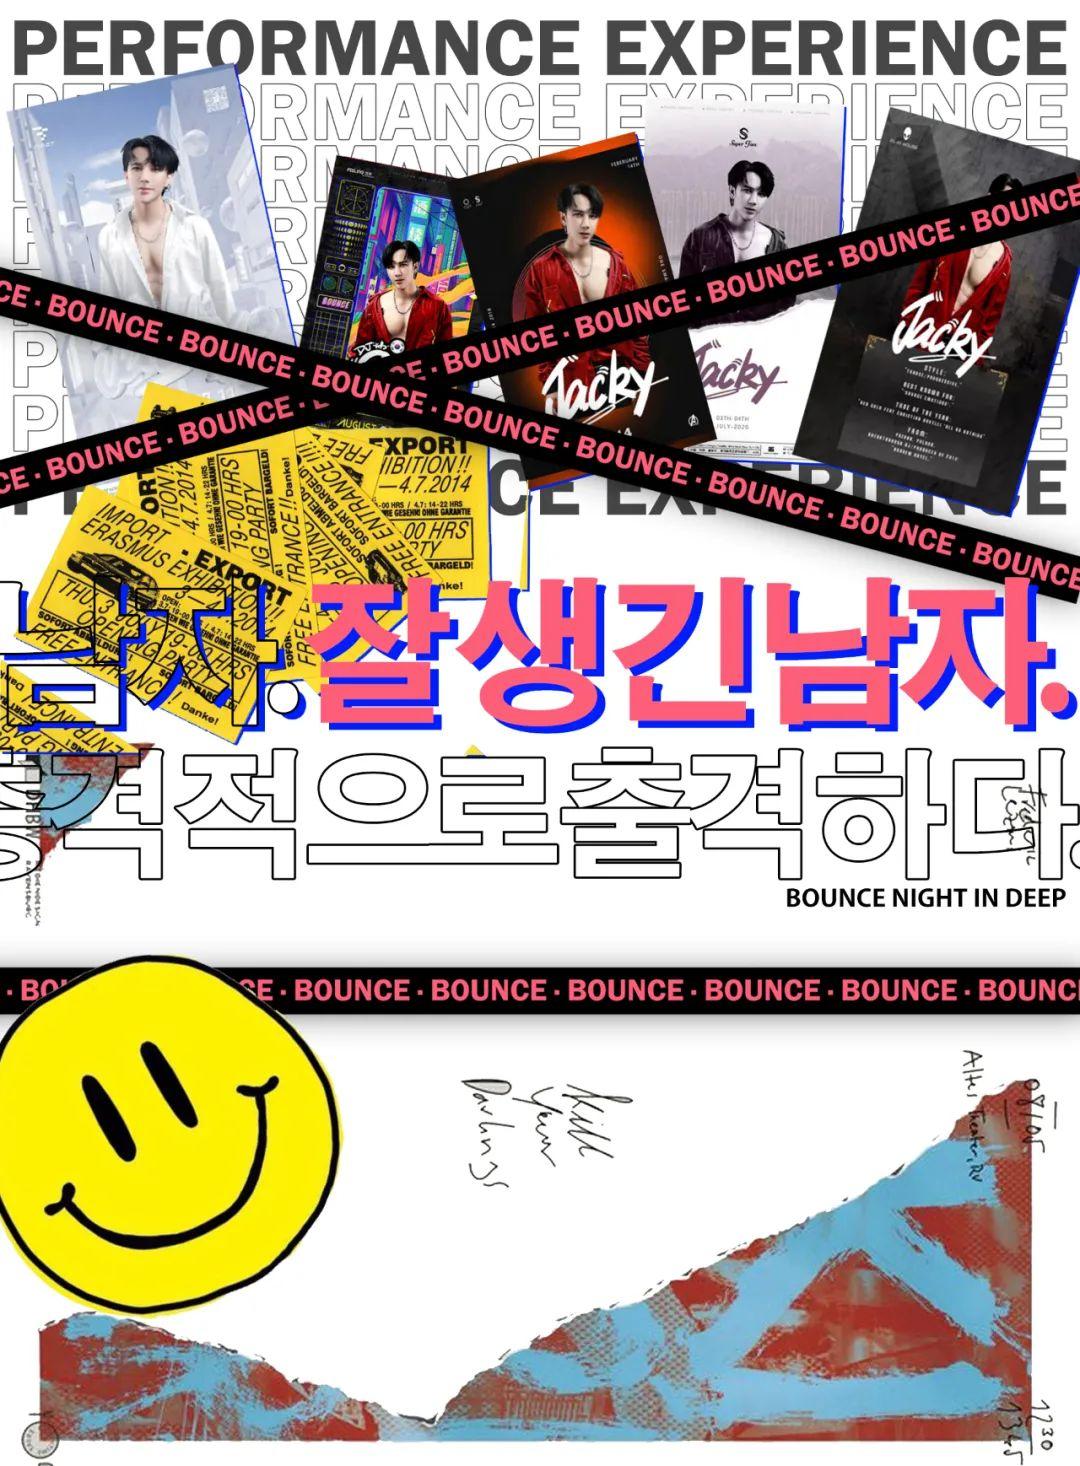 9/25#DJ.JACKY·炜丨最强韩国本土Bounce Official Music!-西安DEEP CLUB(蒂蒲酒吧) 西安